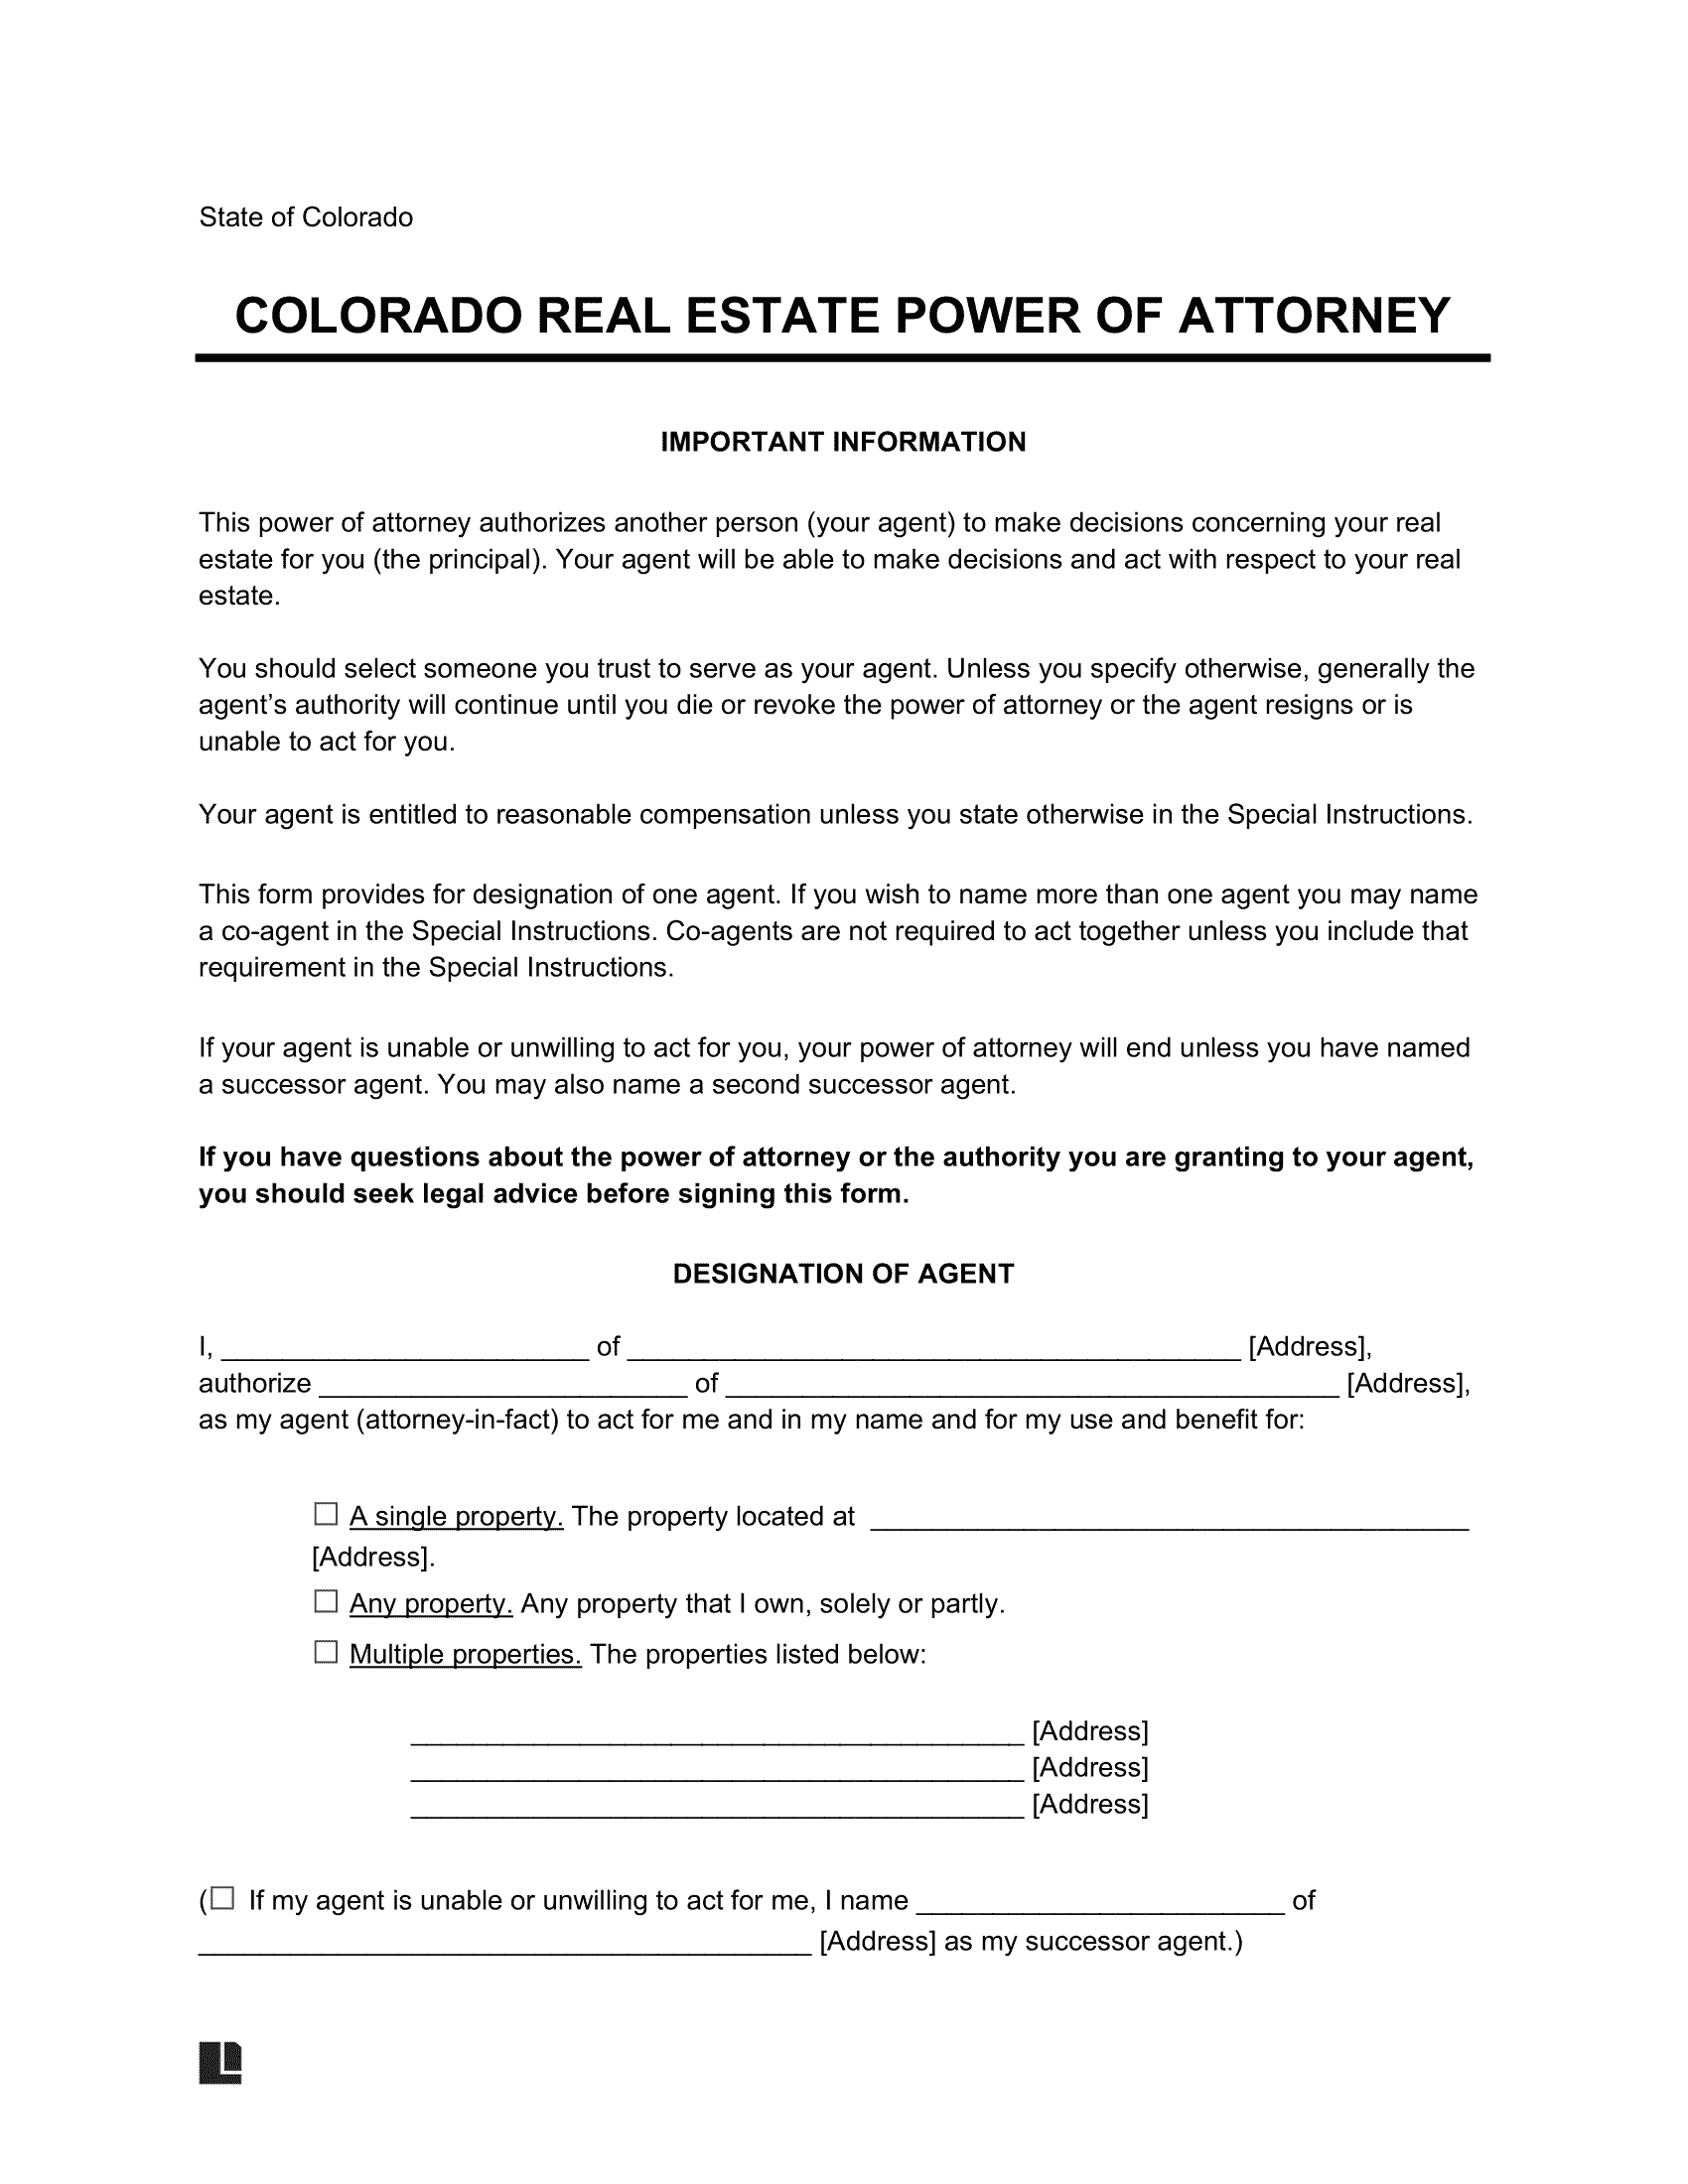 Colorado Real Estate Power of Attorney Form